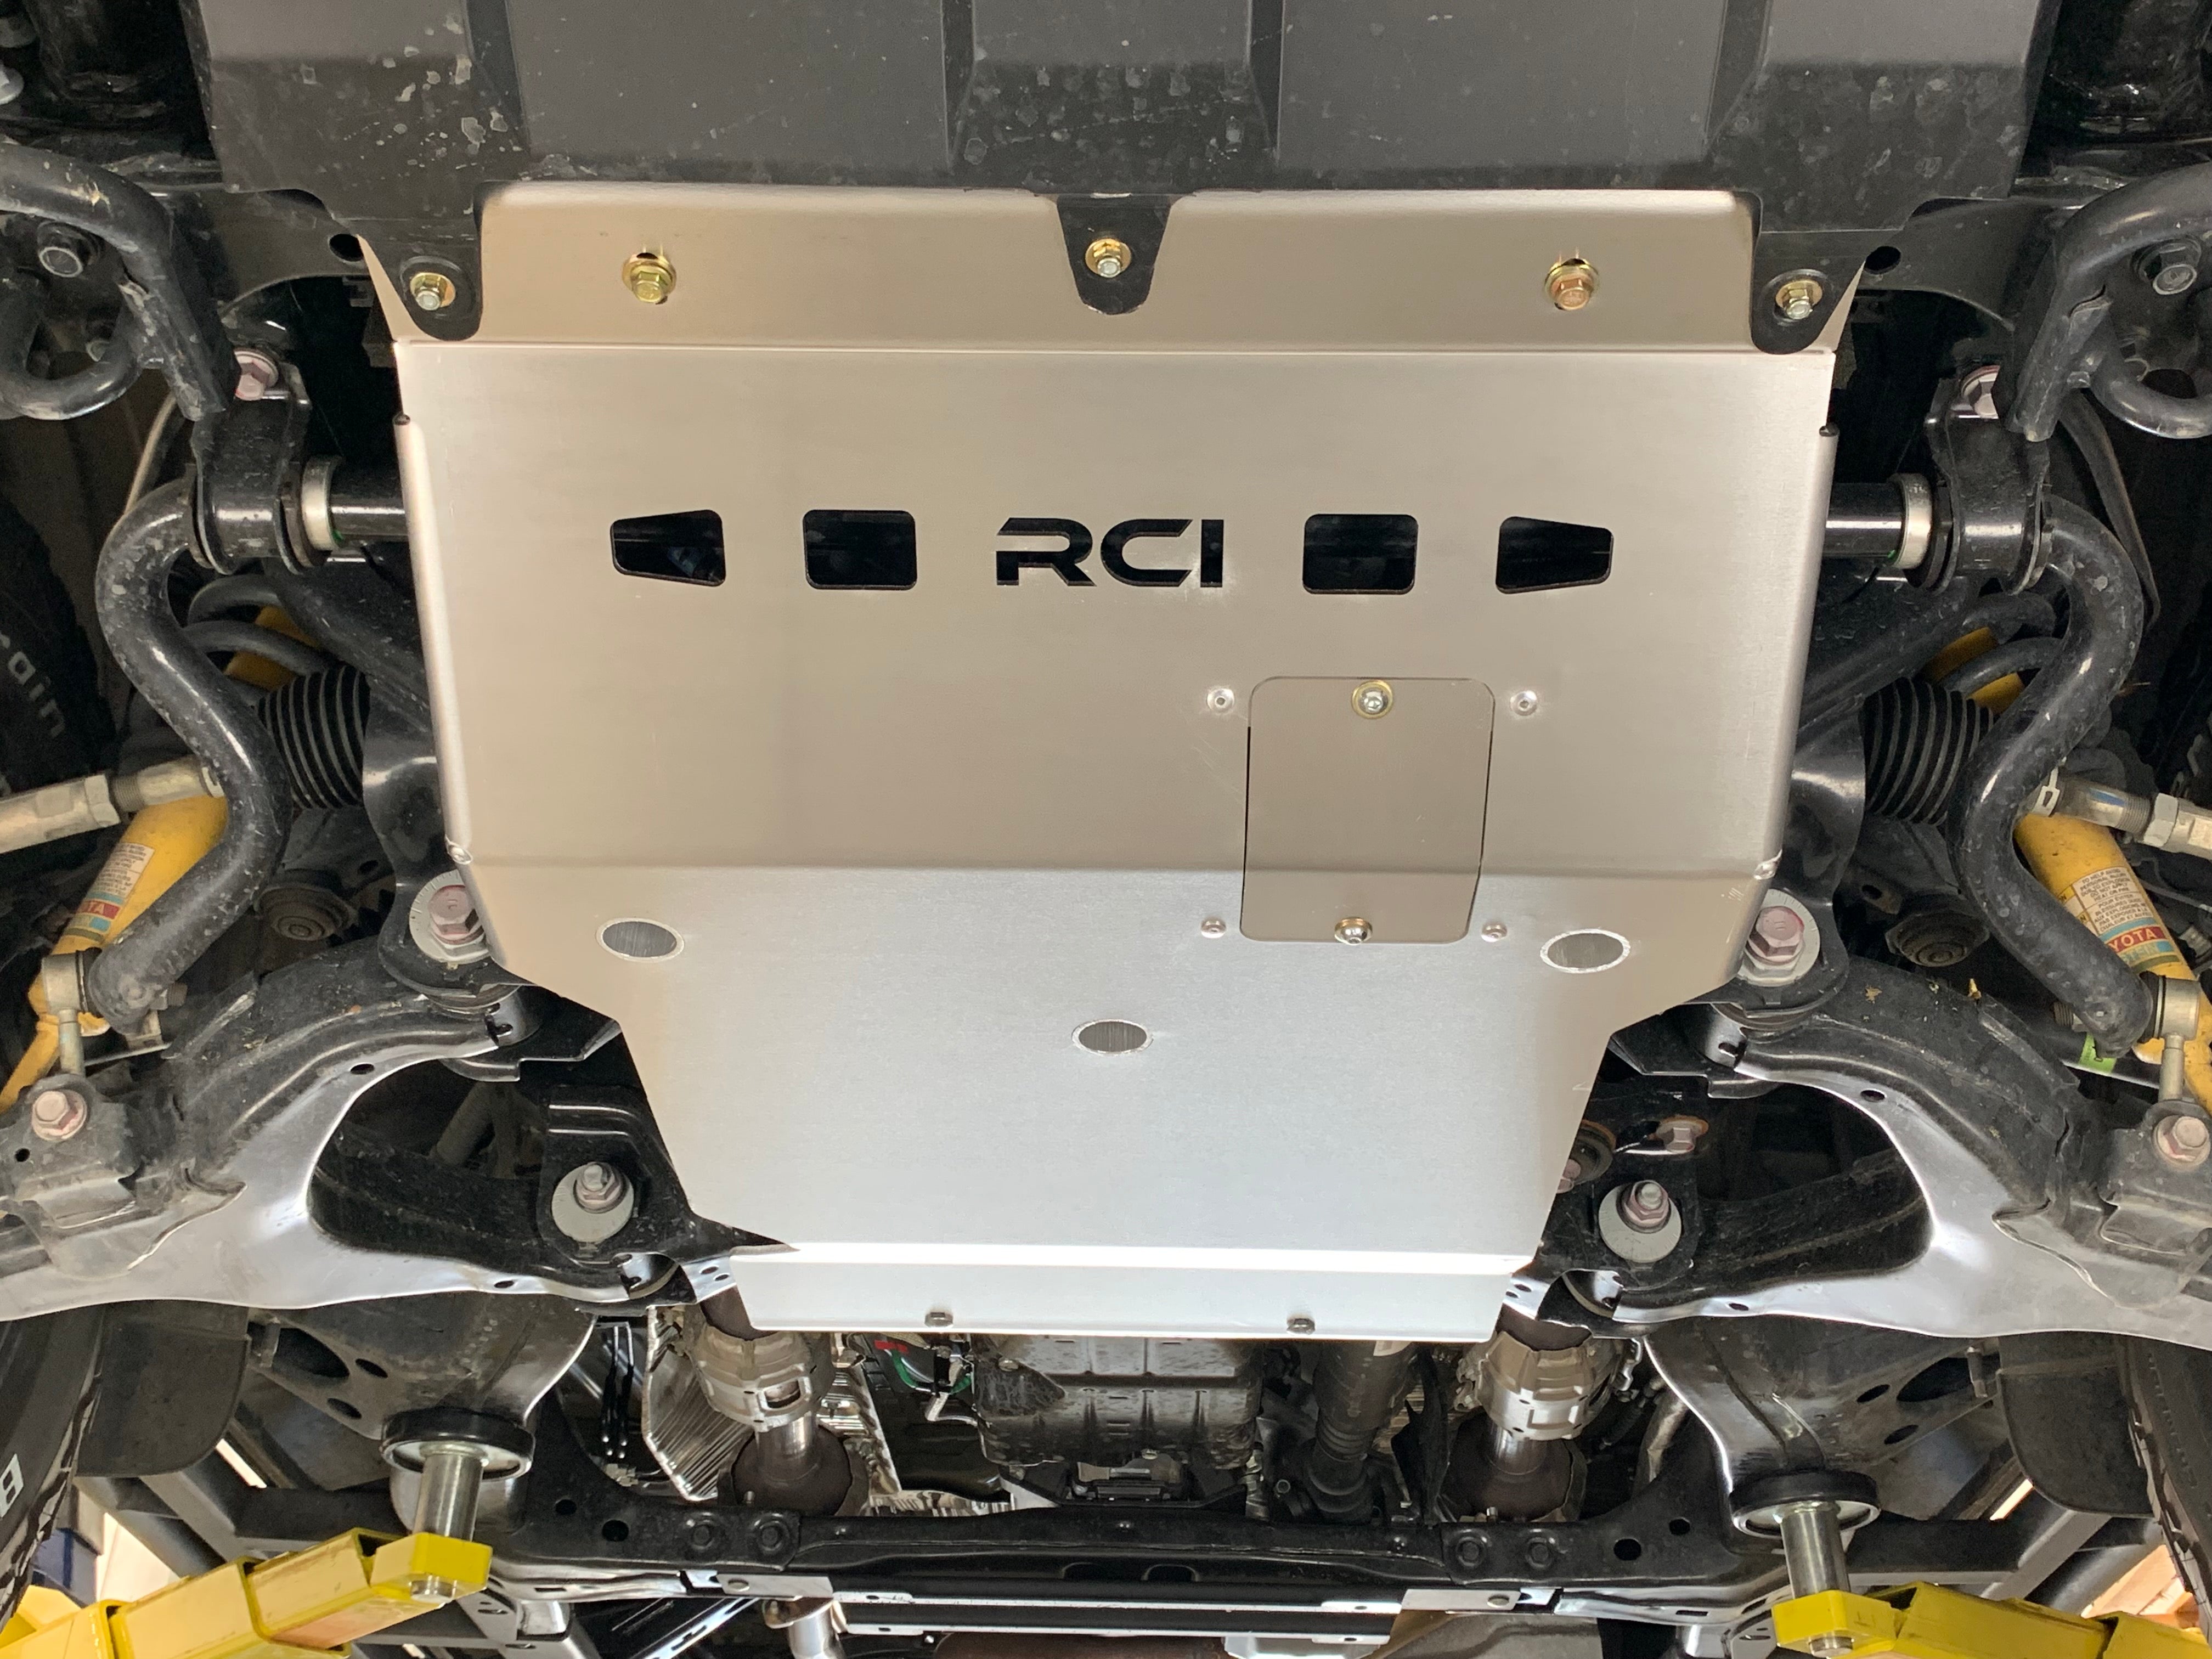 '22-23 Toyota Tundra RCI Off-Road Engine Skid Plate (bottom view)